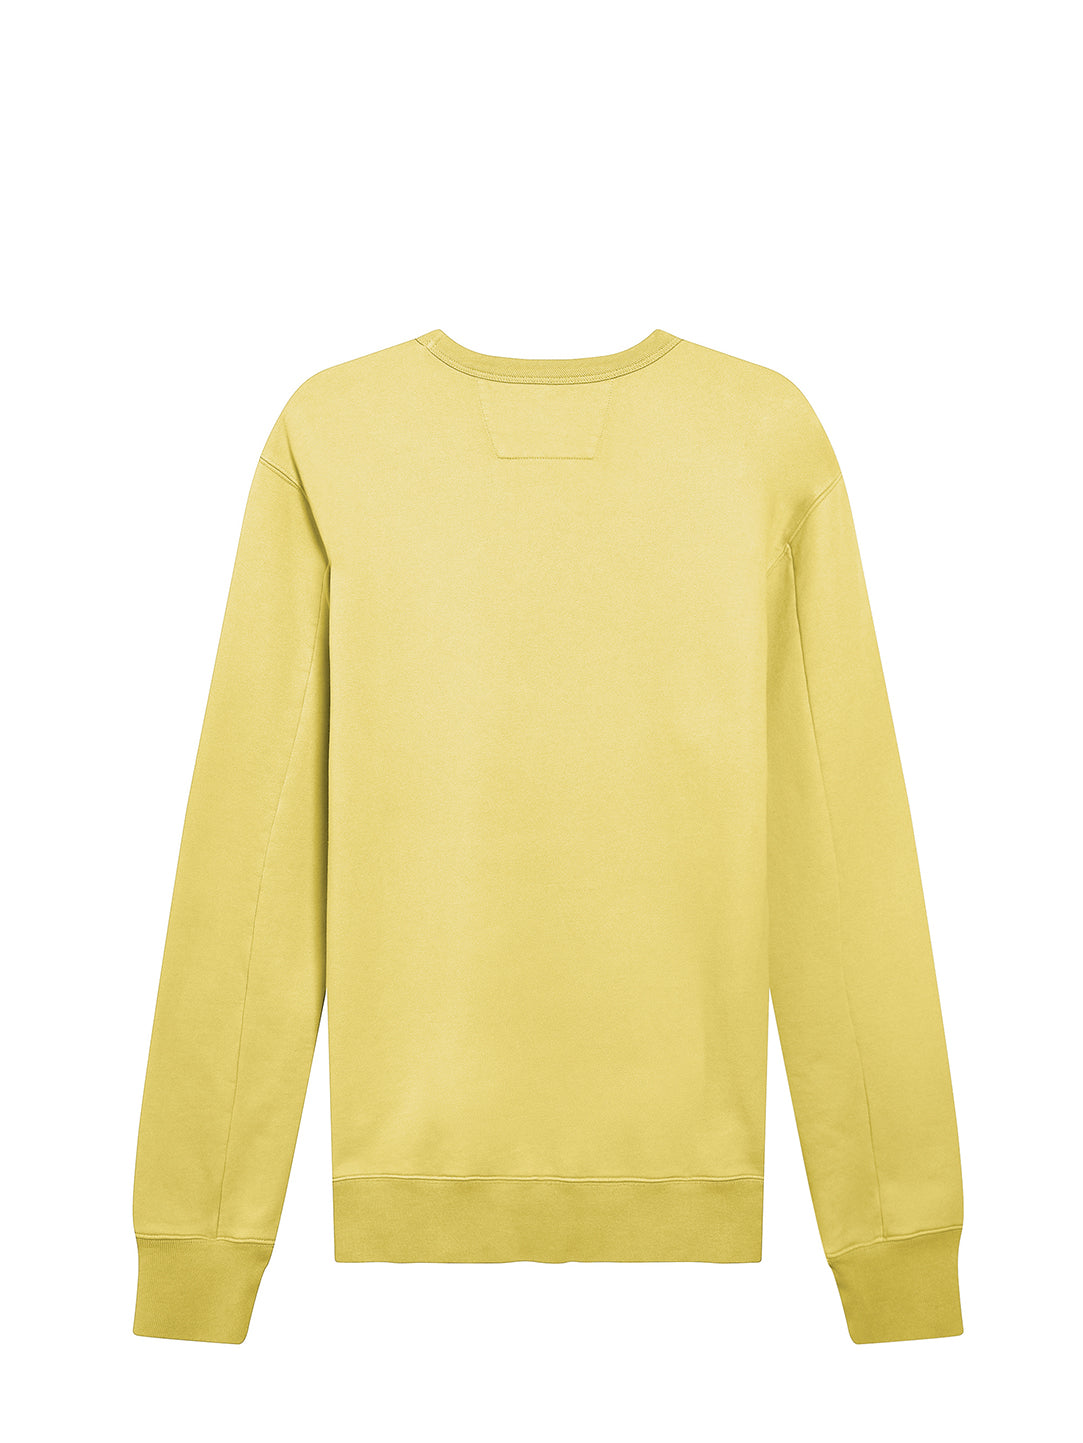 C.P. Company | Garment Dyed Brushed Cotton Fleece Sweatshirt in Golden ...